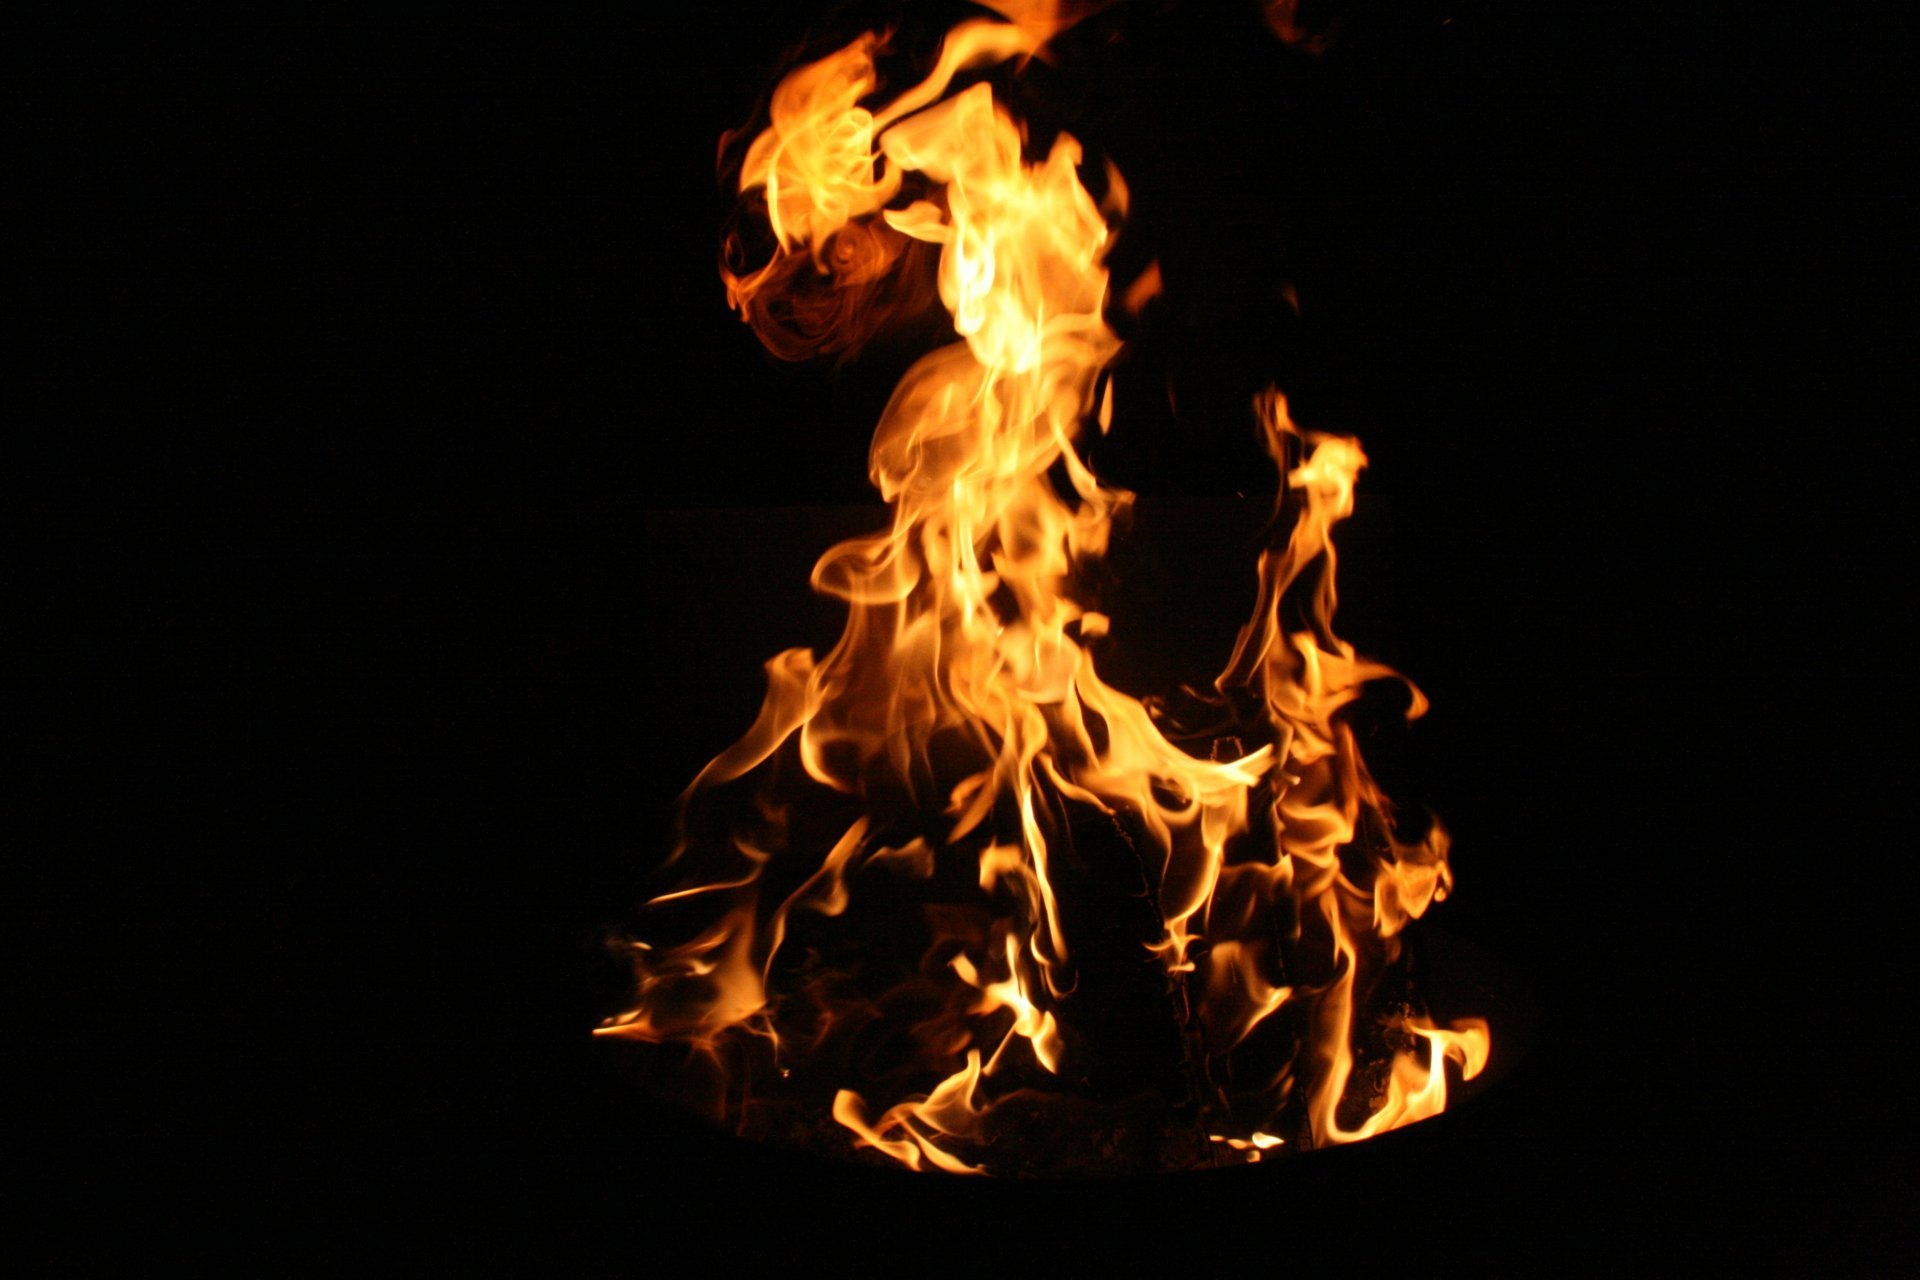 llama fondo de pantalla hd,fuego,fuego,calor,hoguera,hoguera